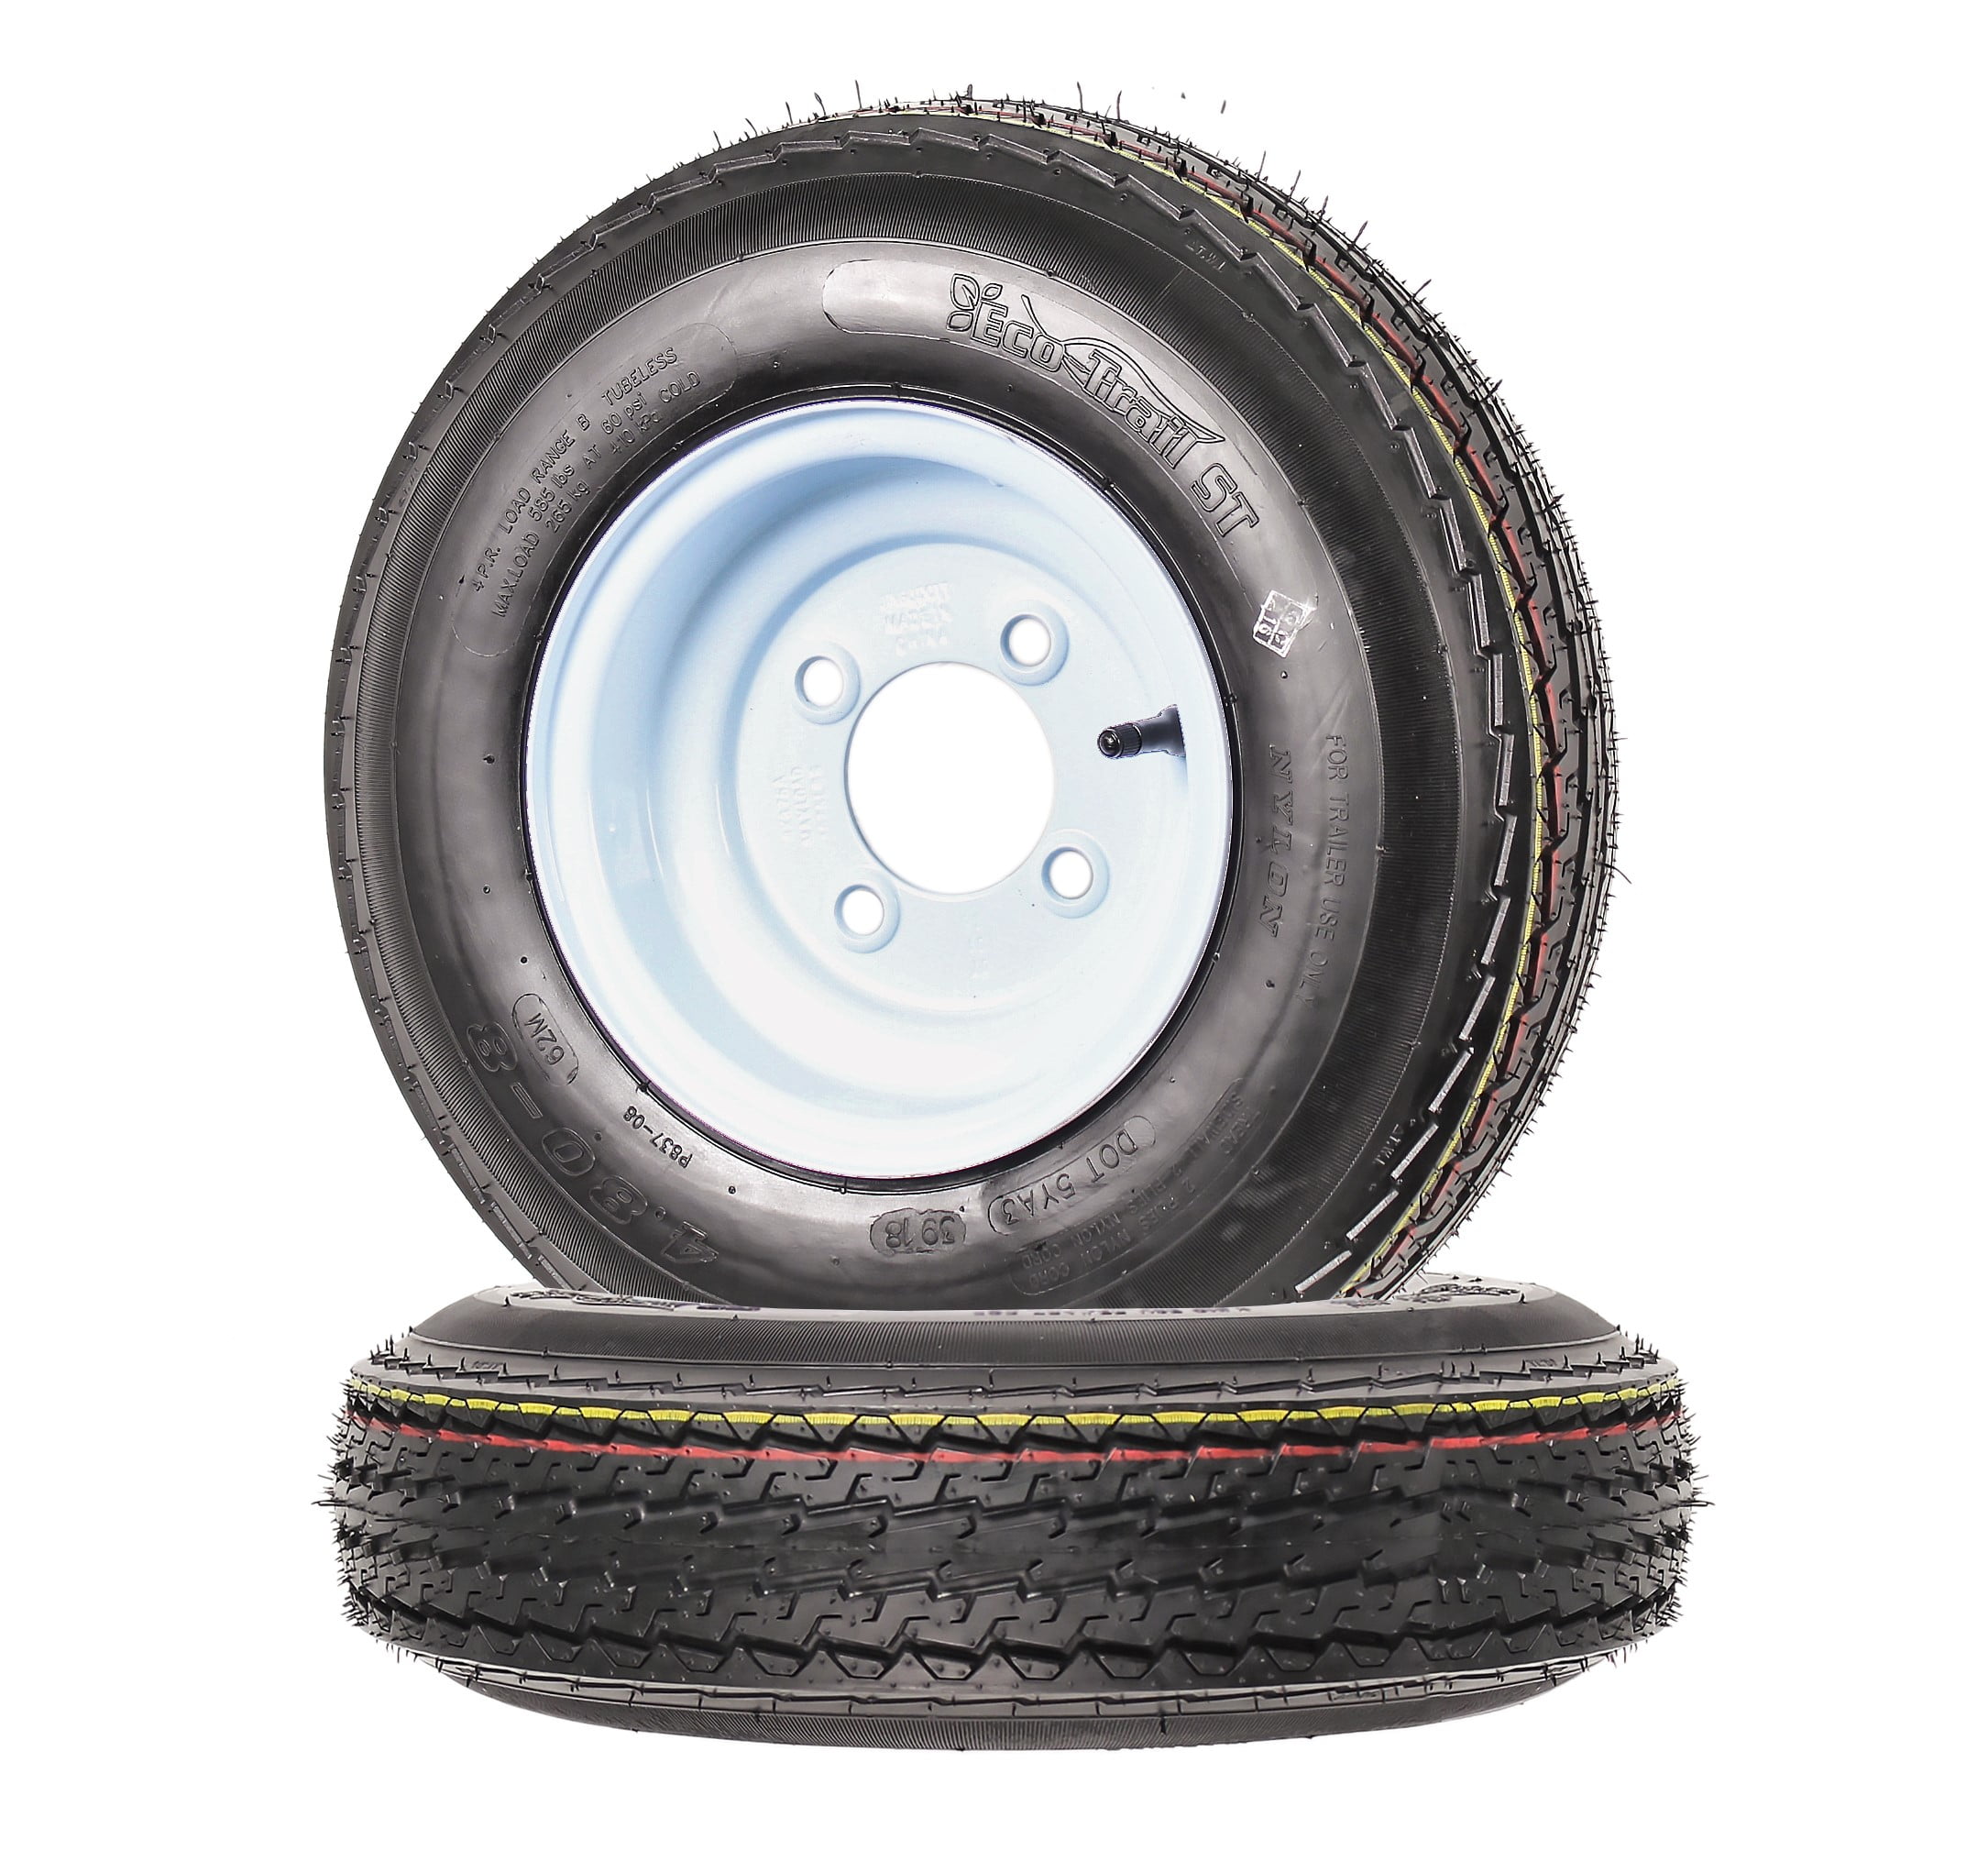 White wall tyres inside diameter 8.5mm pack of 4 